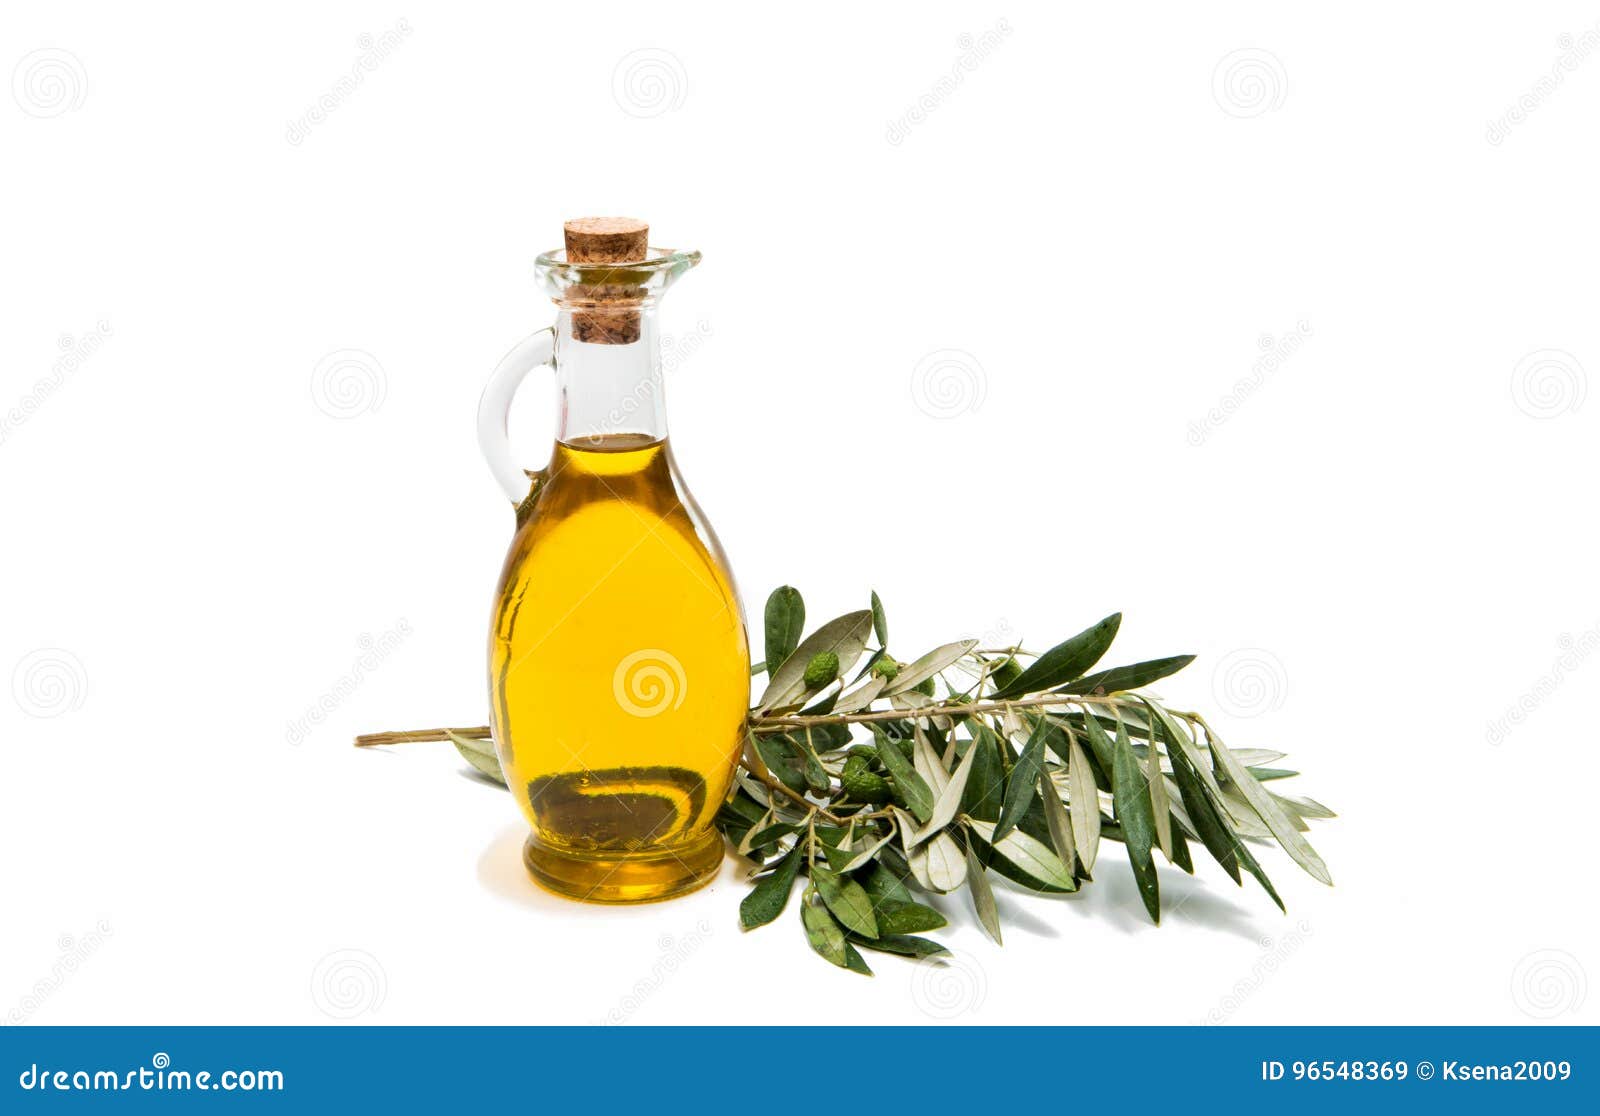 A bottle of olive oil. Бутылка оливкового масла. Оливковое масло в бутылке Olive Oil. Бутылка масла с веткой оливы. Оливковое масло в железной бутылке.